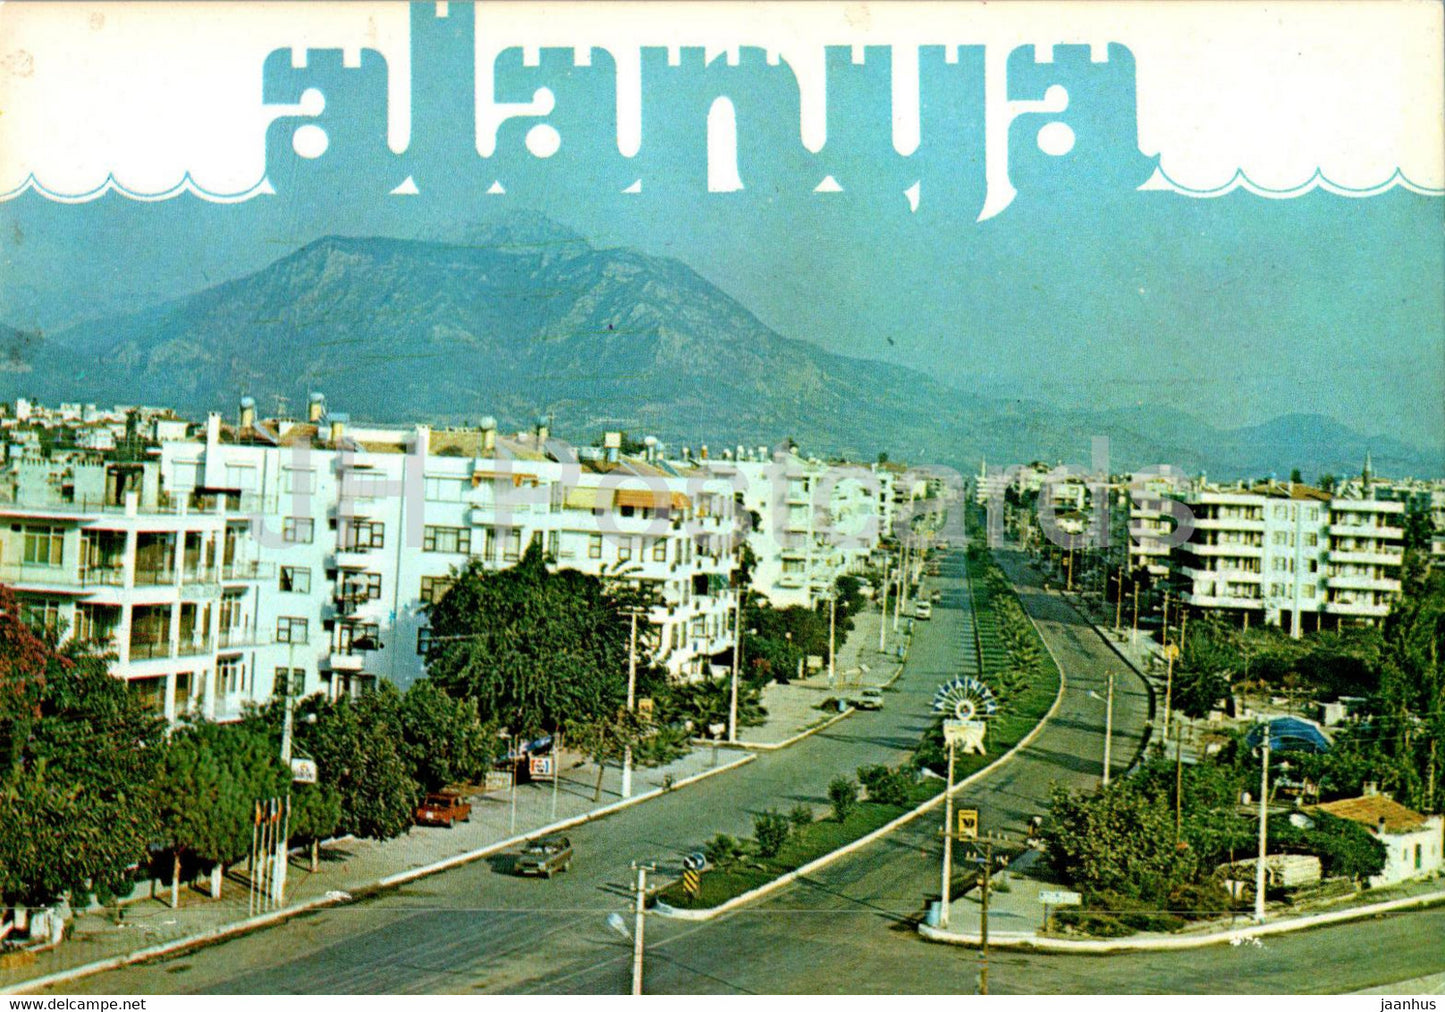 Alanya - The Entrance of Alanya - 07-120 - Turkey - unused - JH Postcards